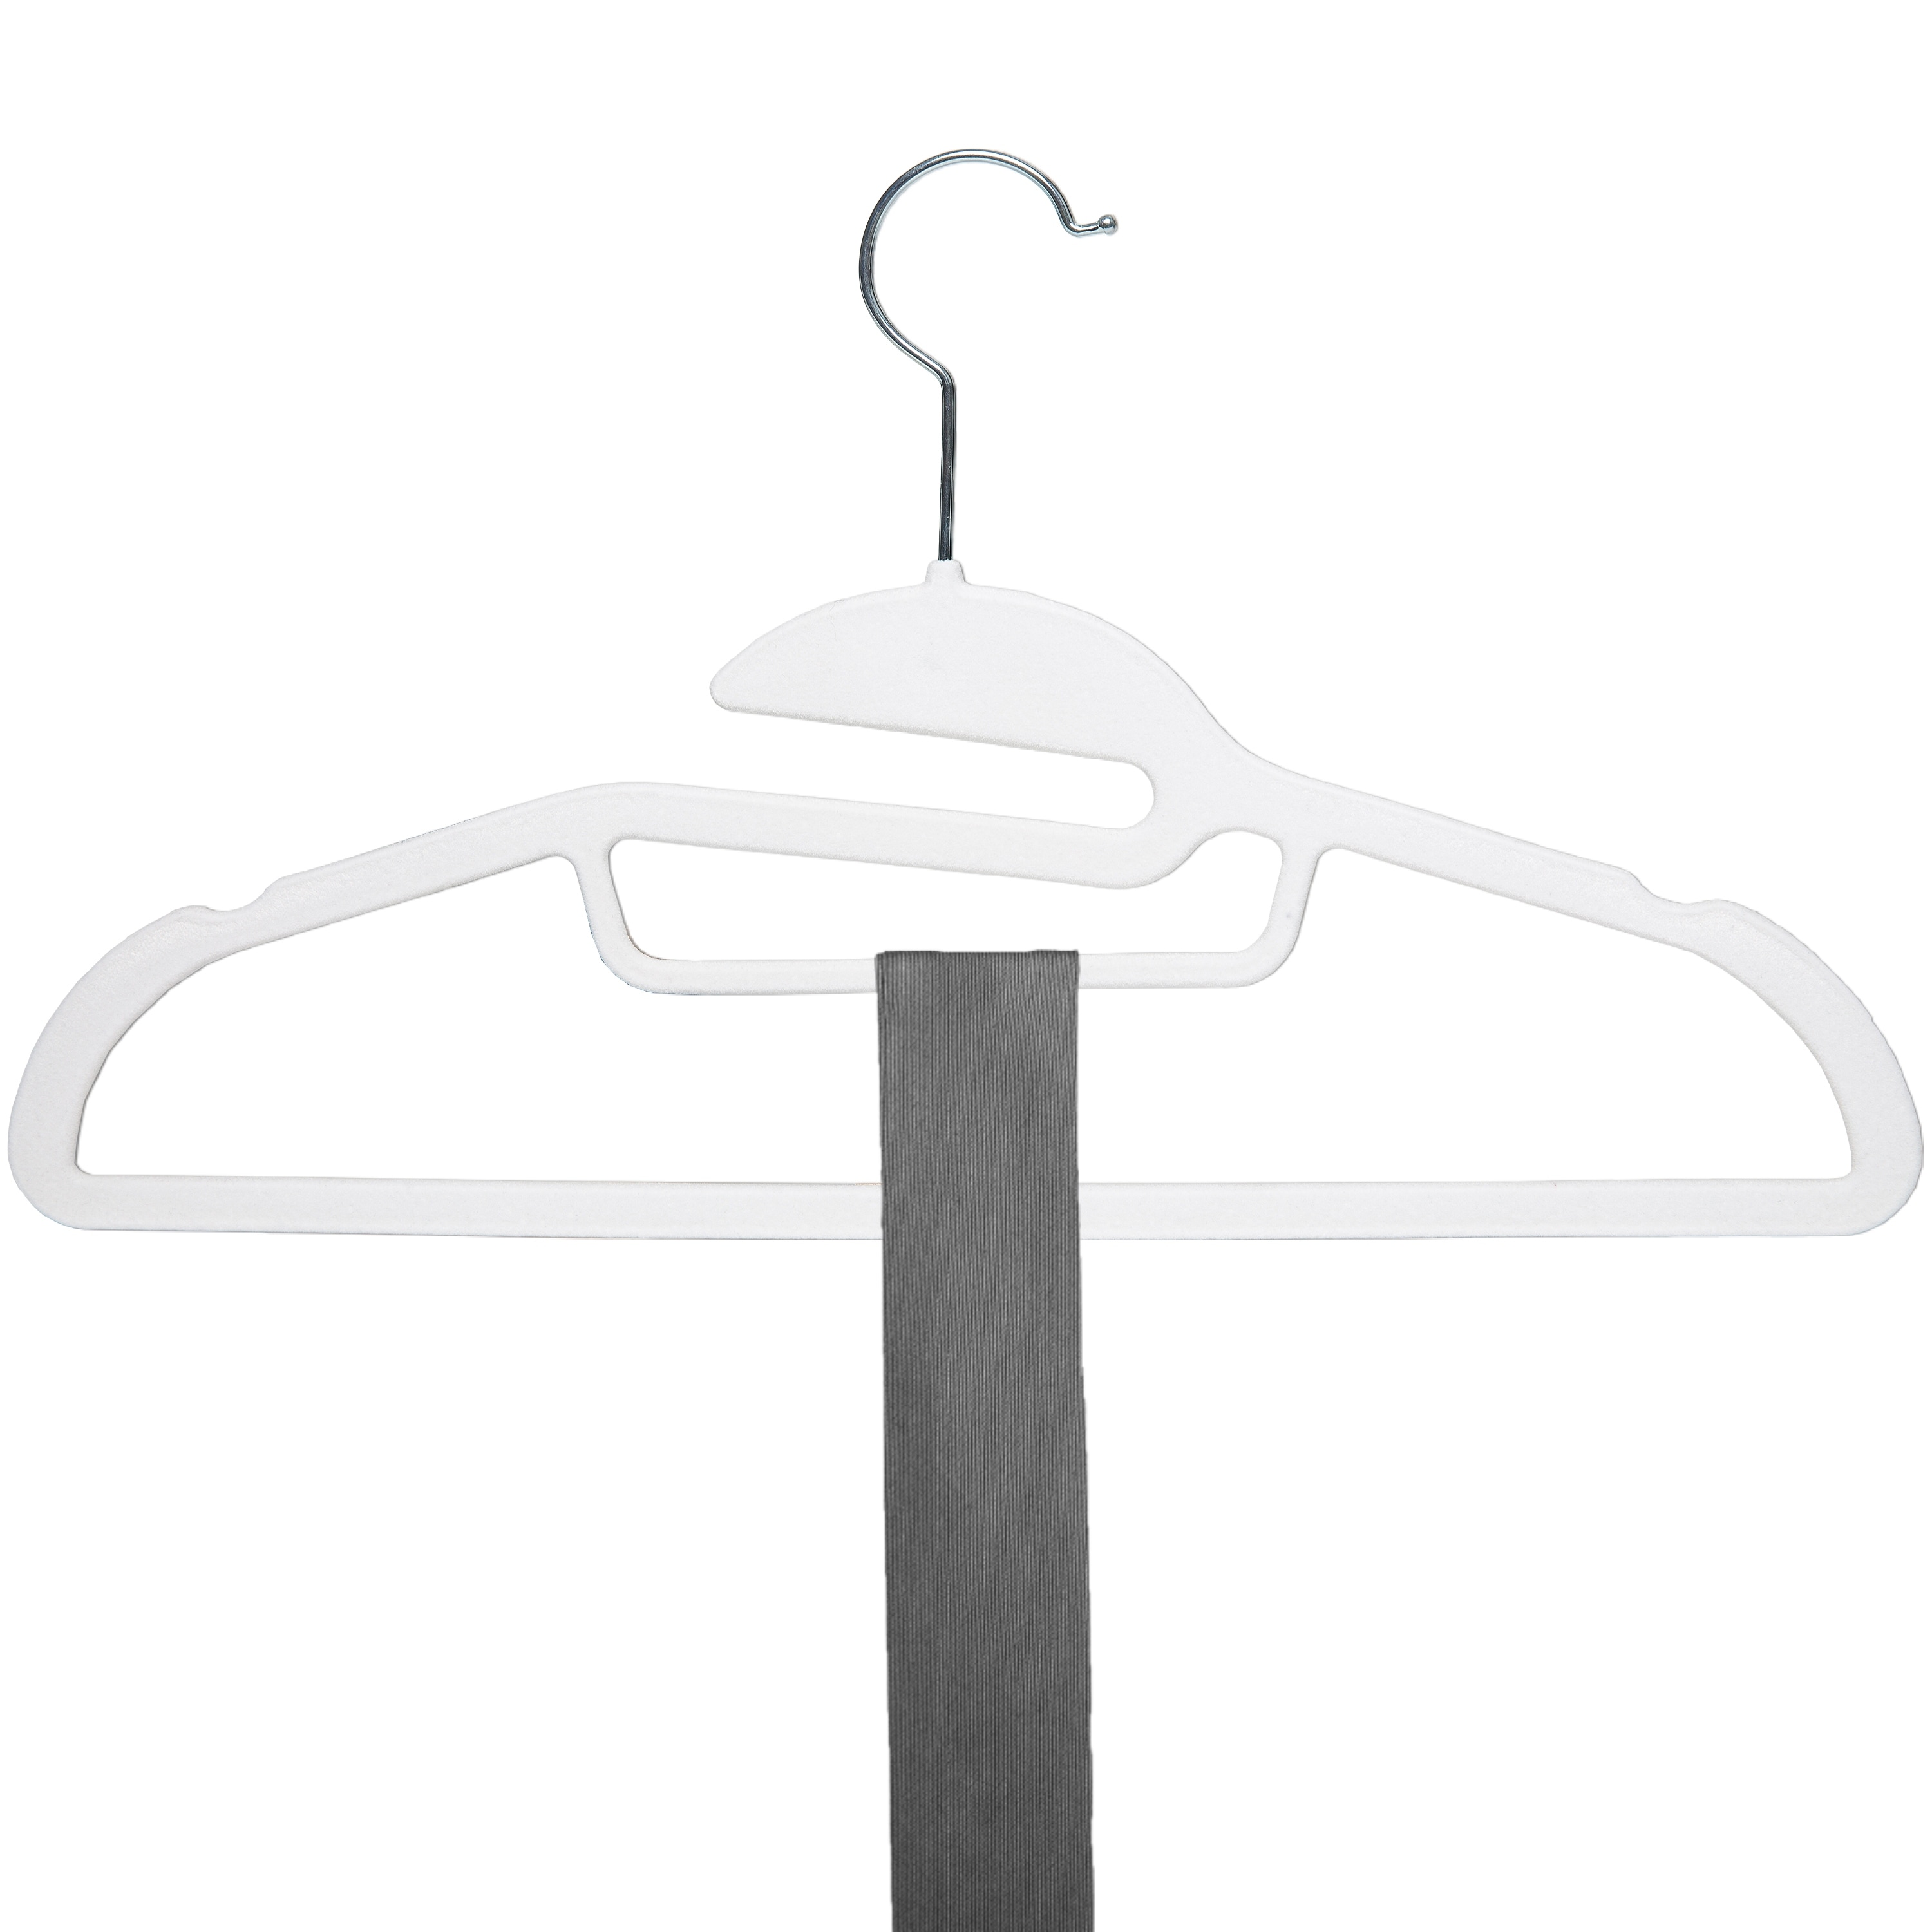 Simplify 24 Pack Ultimate Hanger - Black